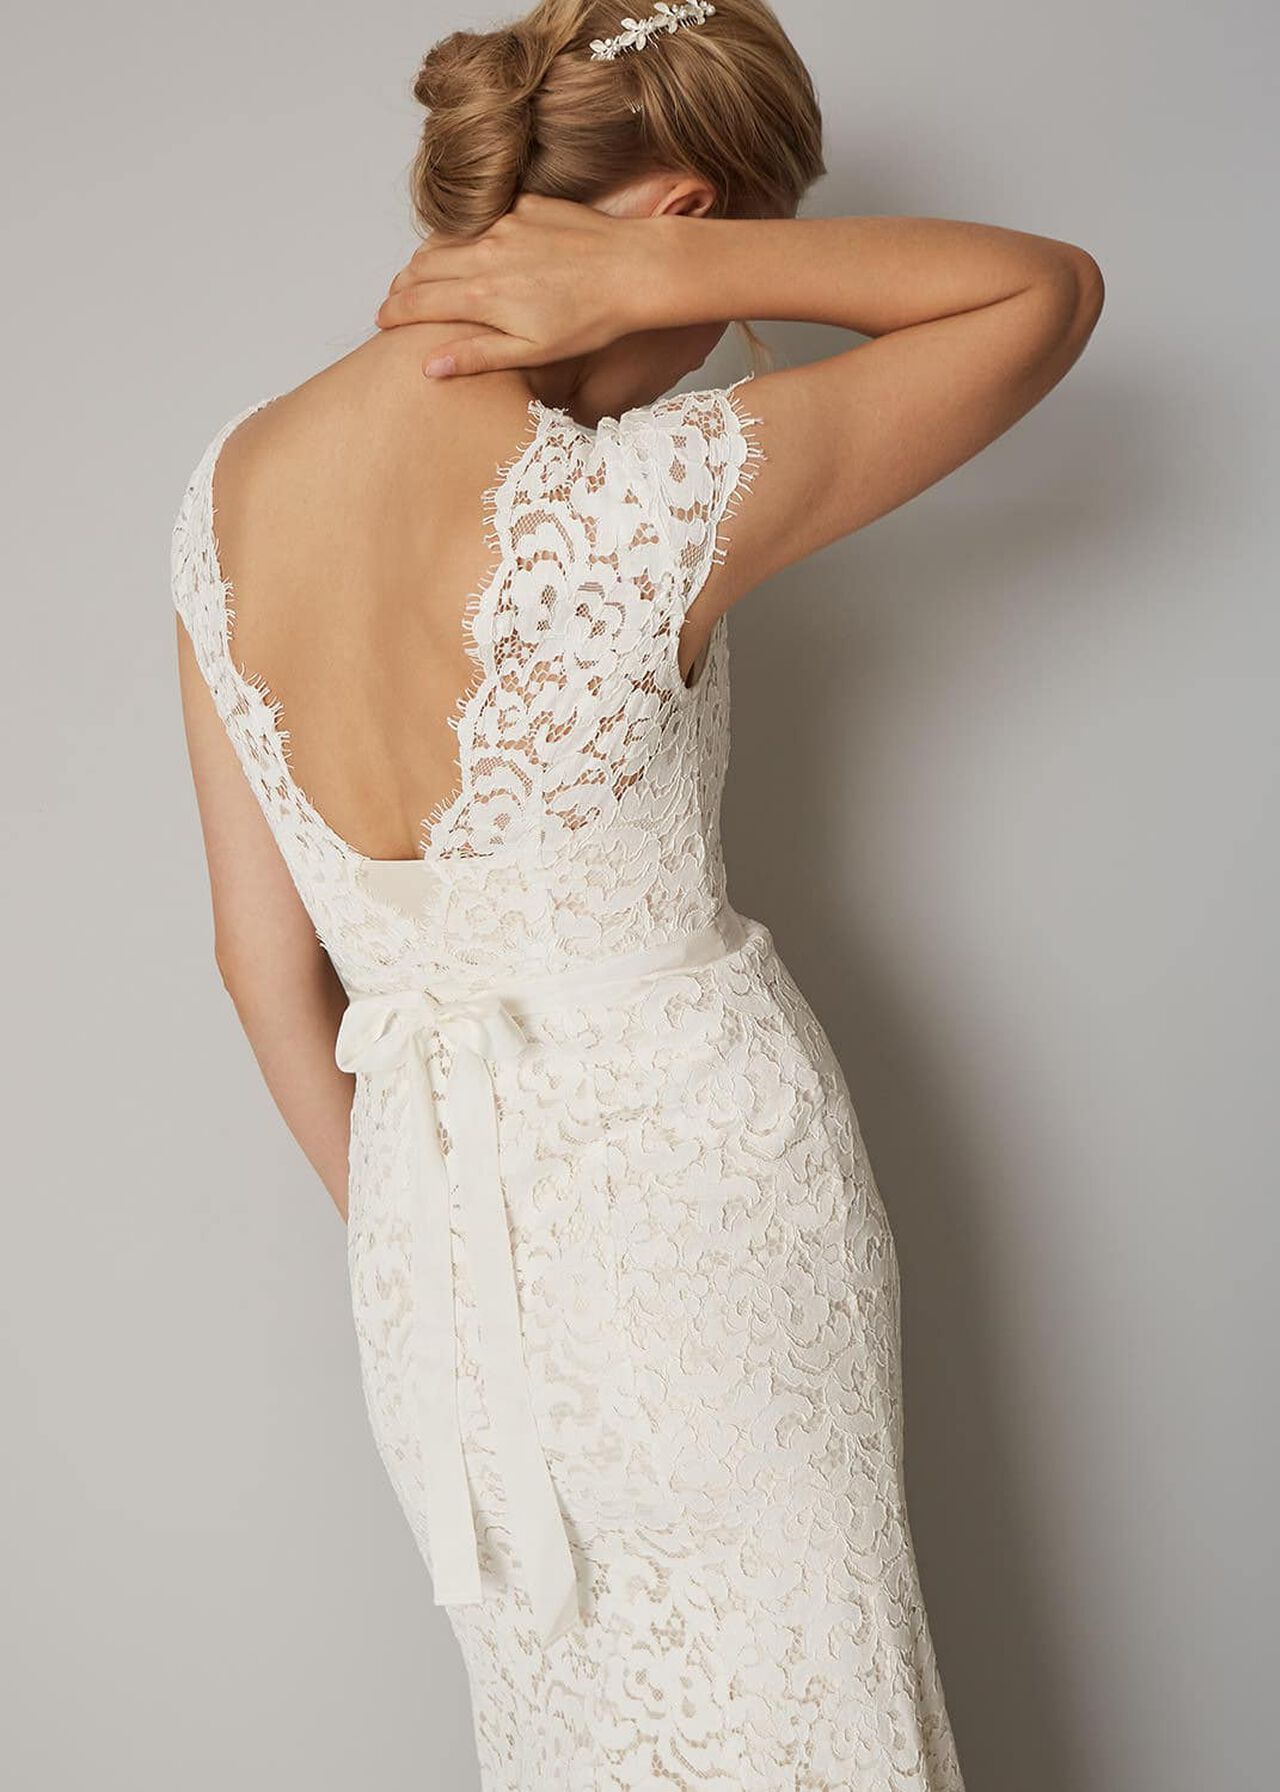 Maegen Lace Wedding Dress | Phase Eight